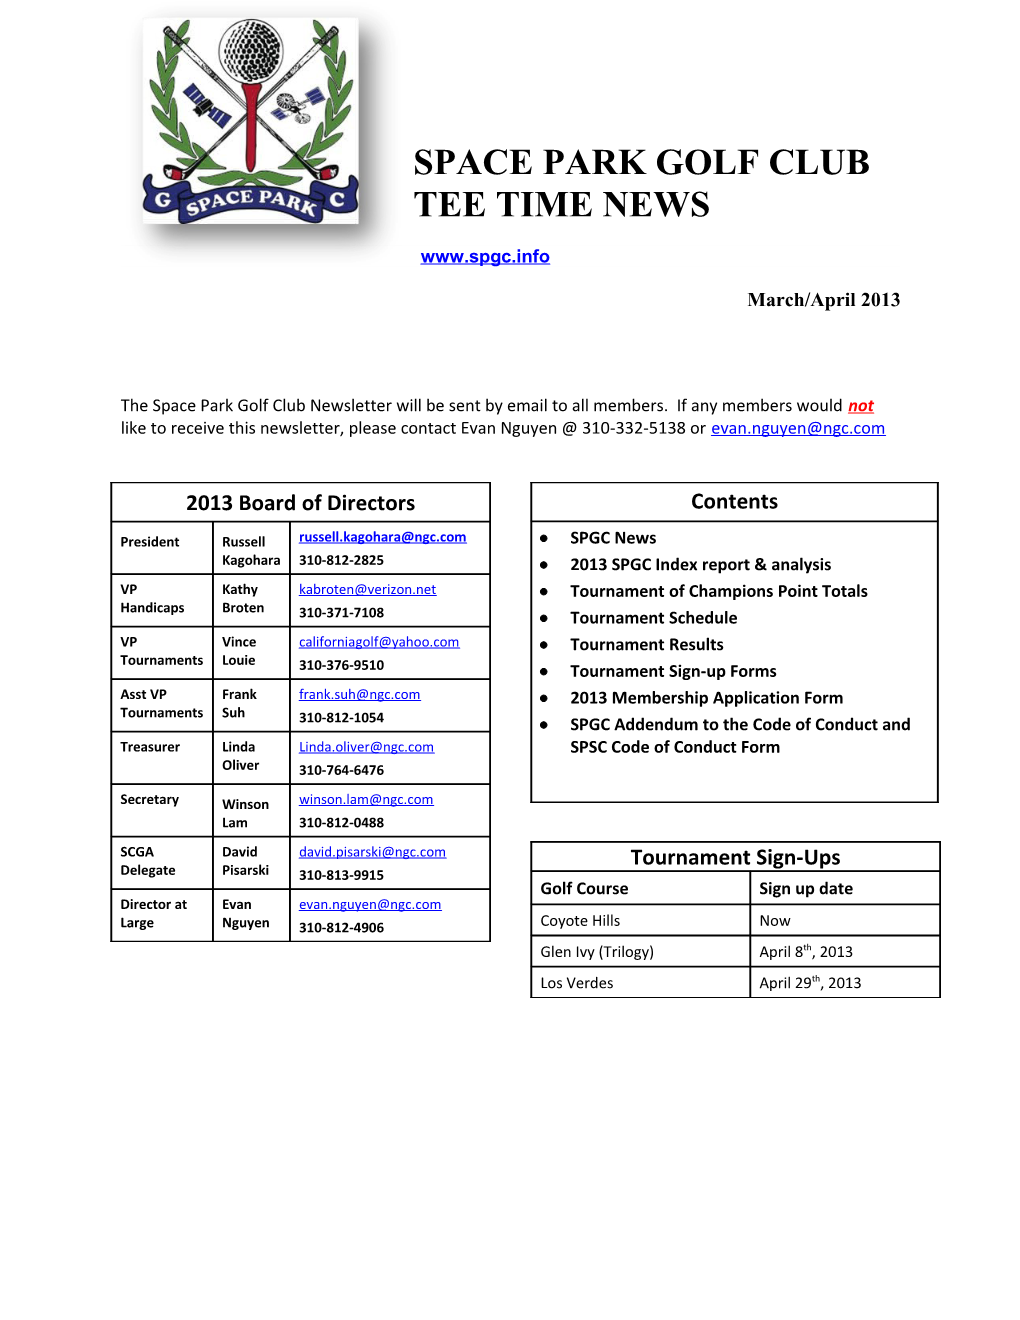 Space Park Golf Club Tee Time News